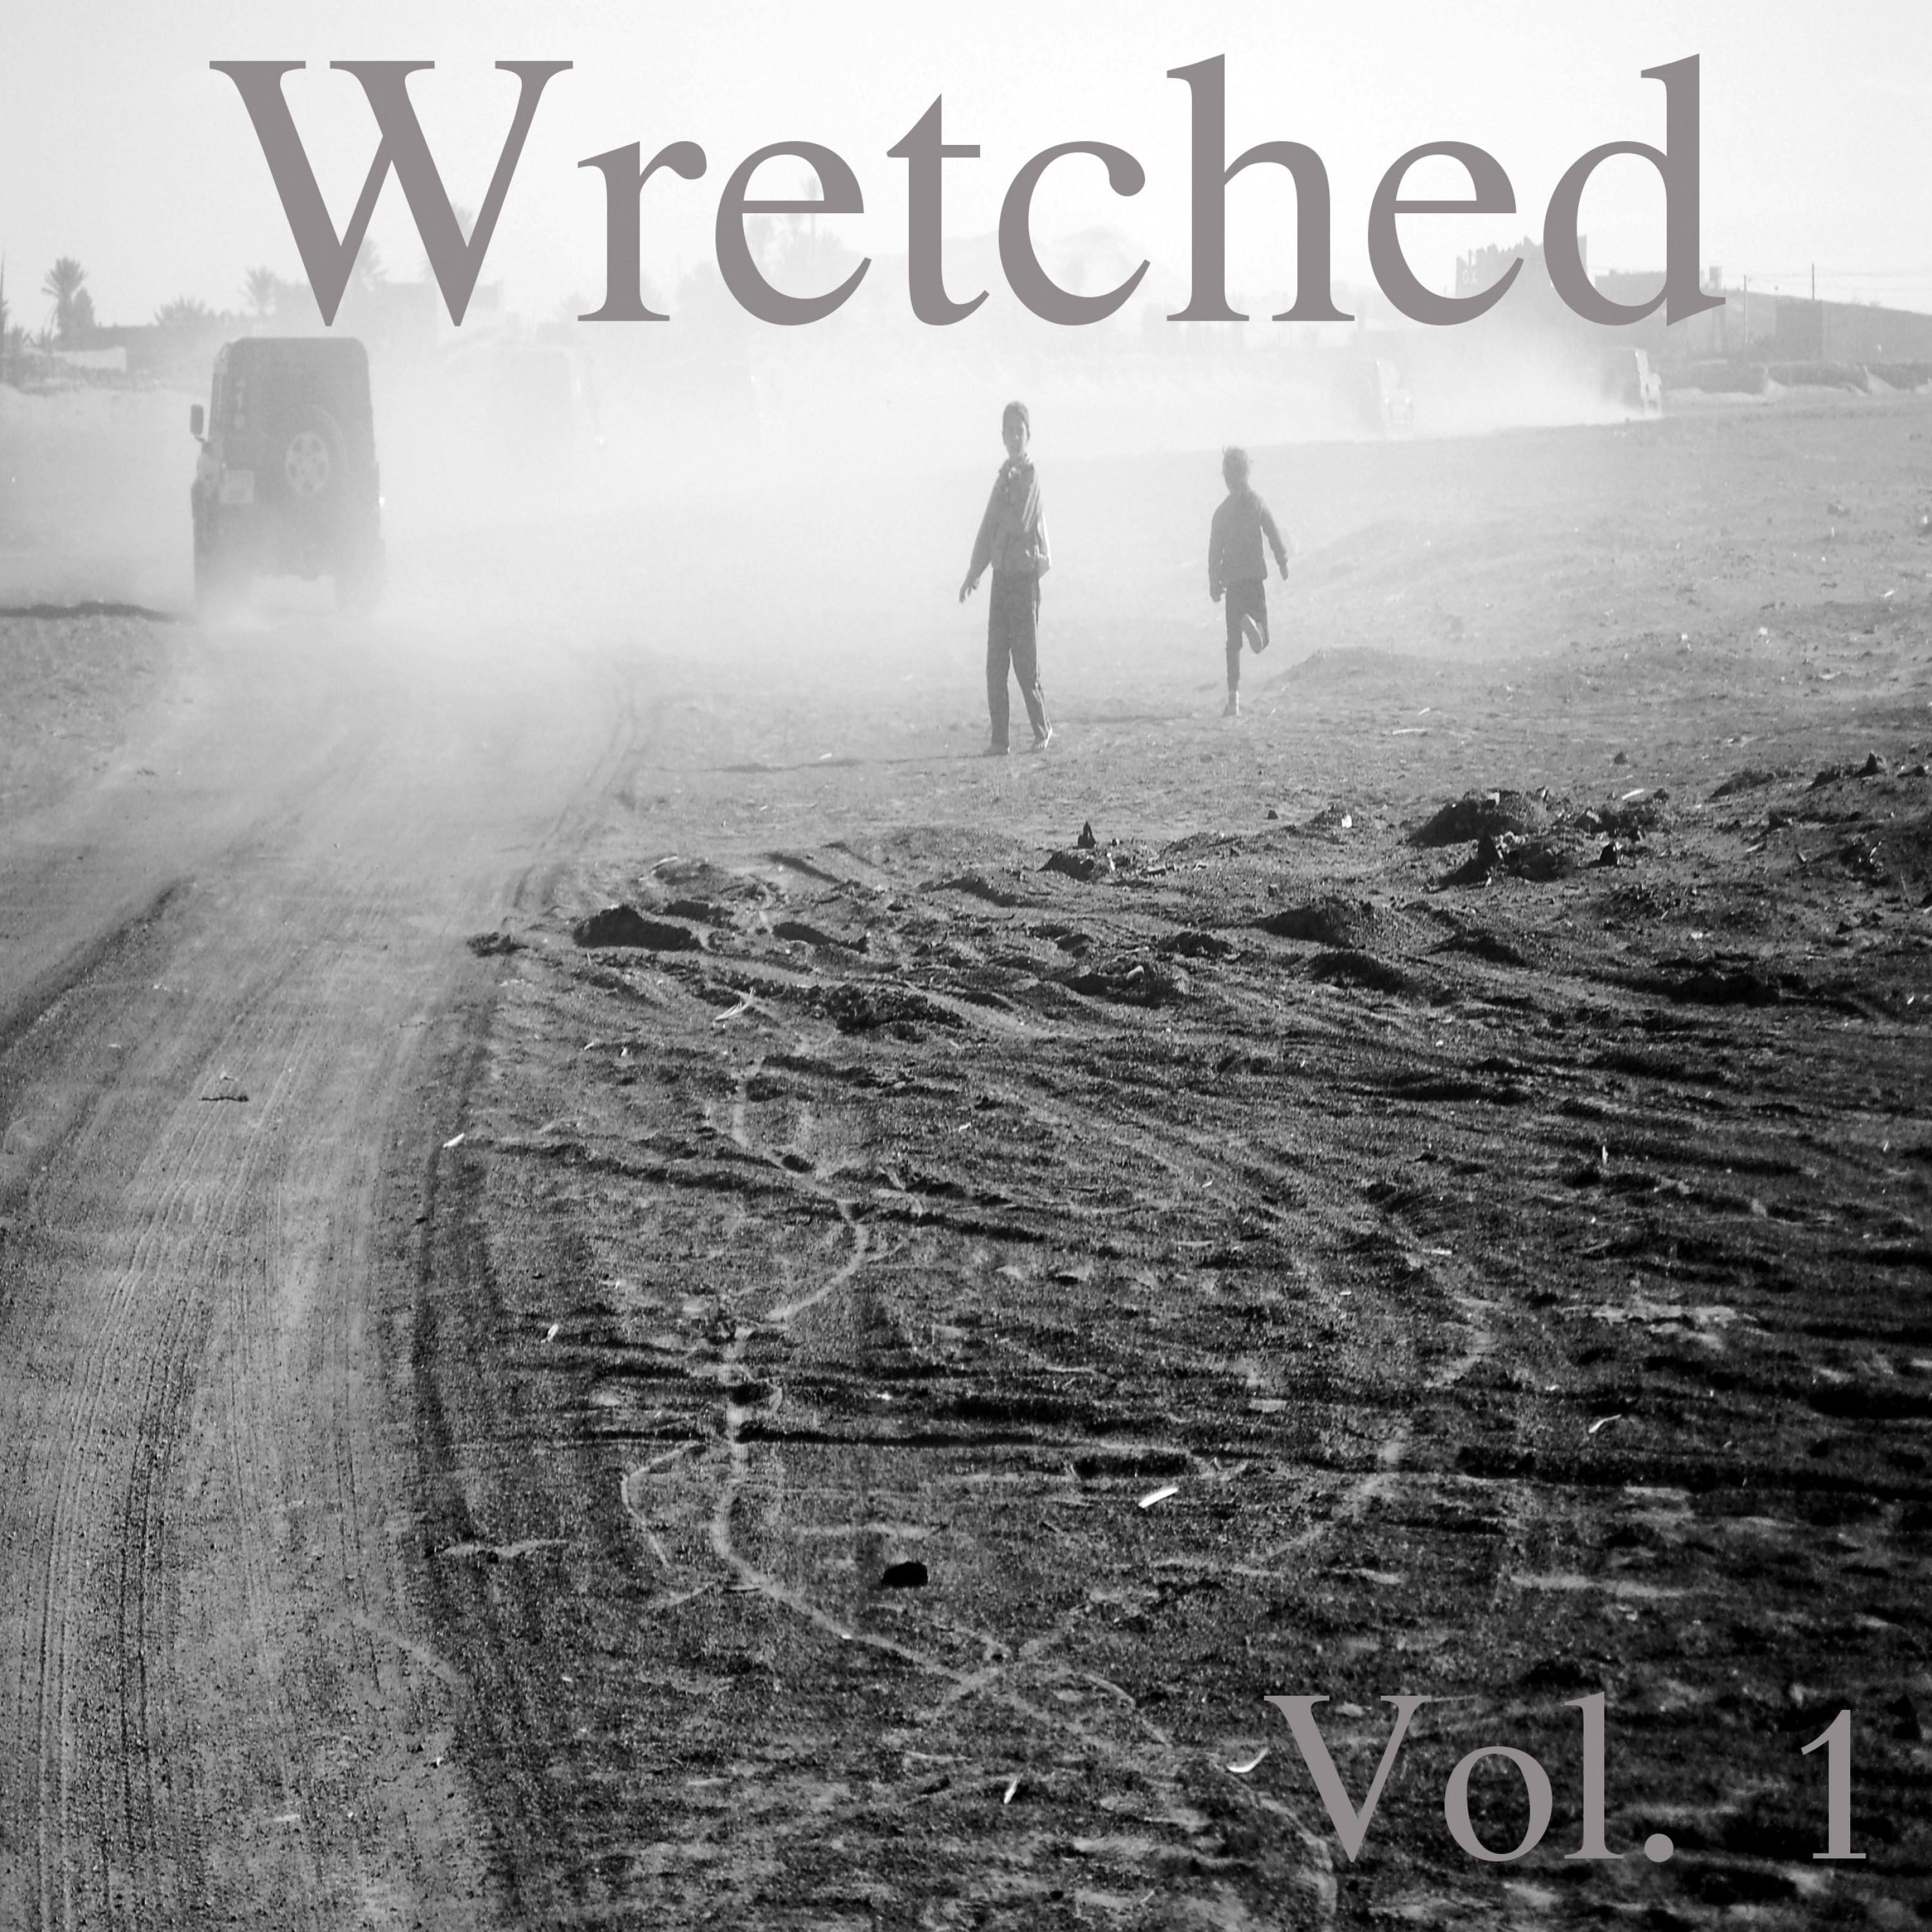 wretched, vol. 1